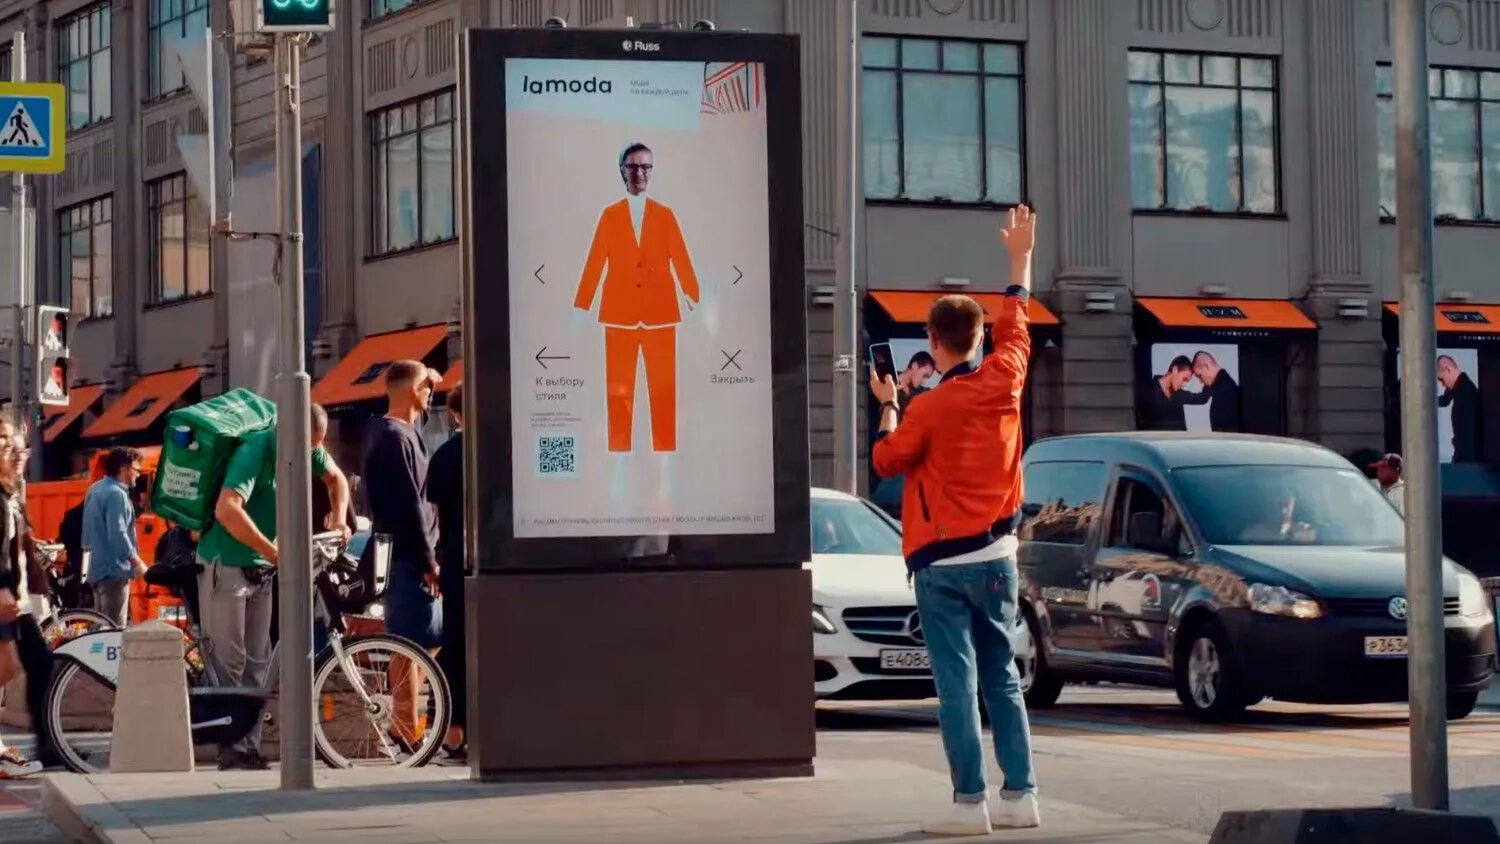 Интерактивная реклама на улице. Реклама уличная интерактивная. Дополненная реальность на улице. Дополненная реальность в рекламе. Реальность в рекламе